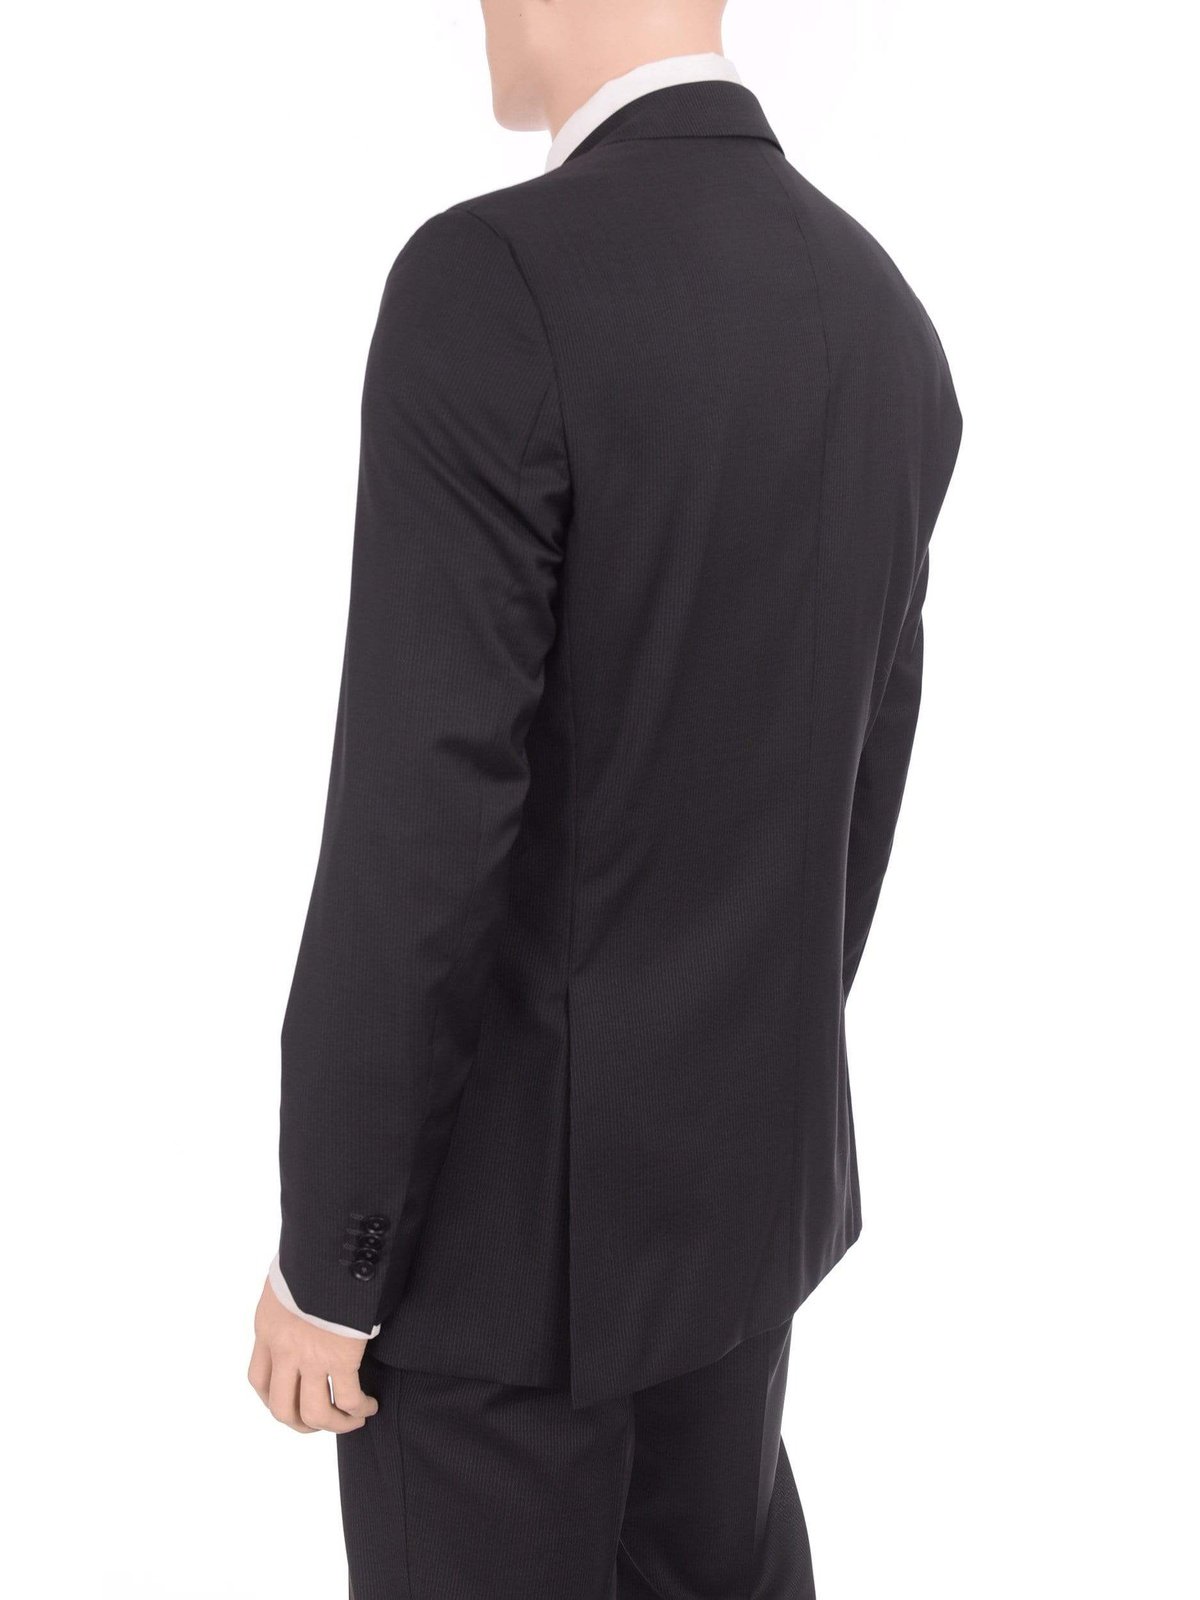 HUGO BOSS Black Wool Suit | The Suit Depot